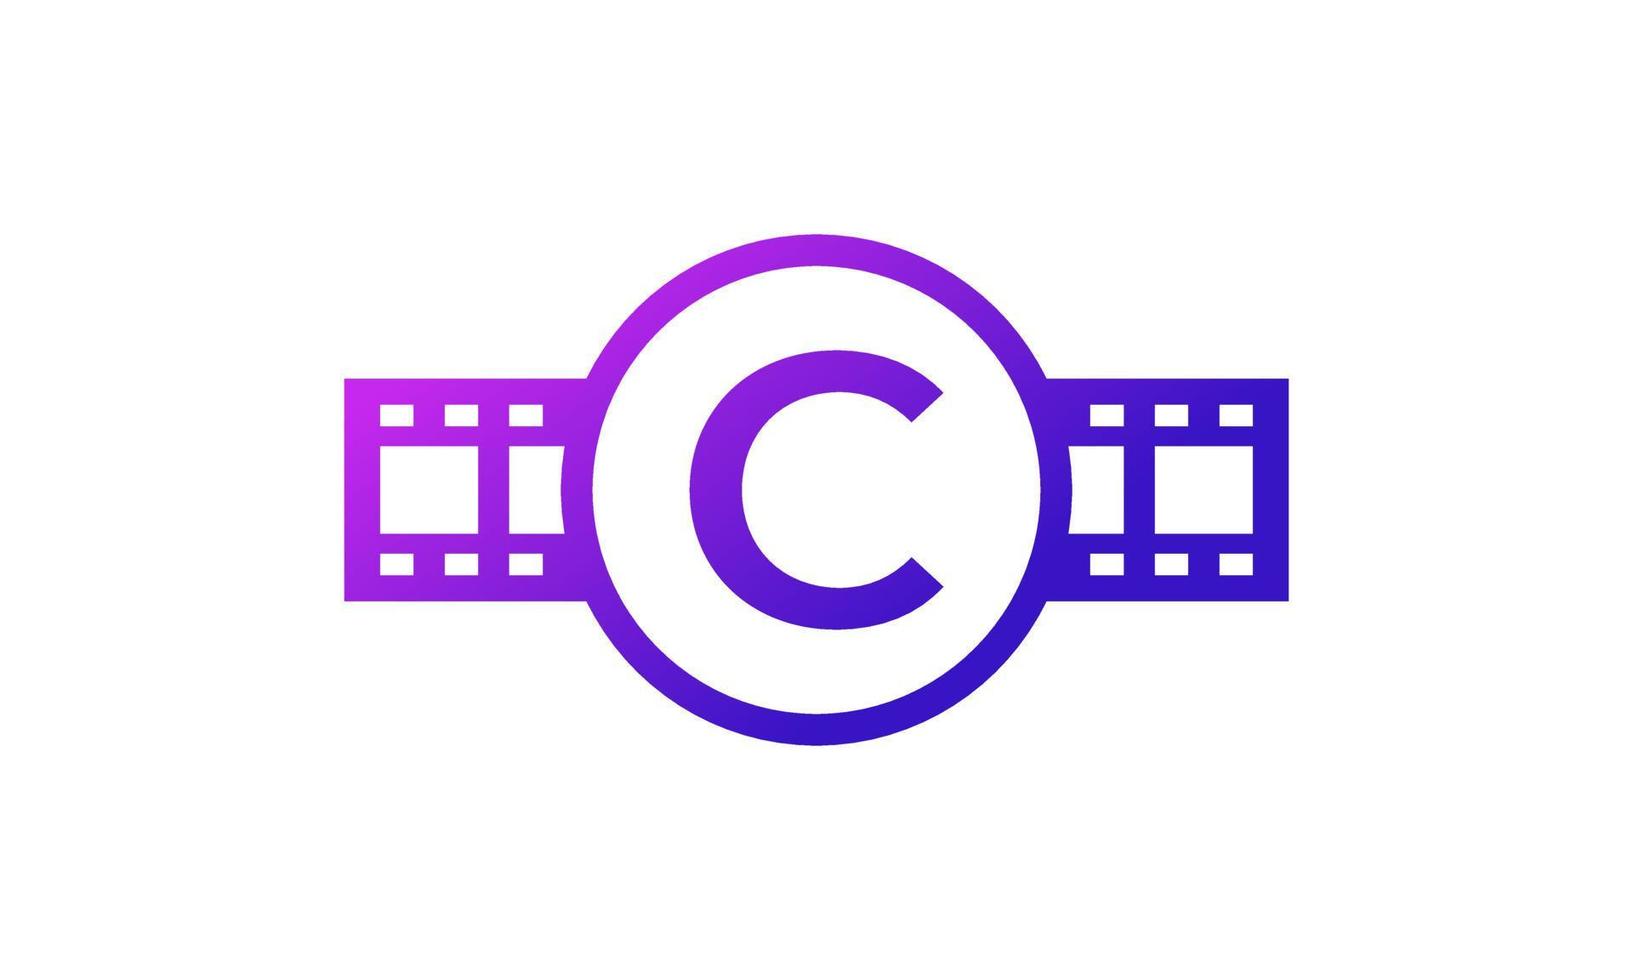 letra inicial c círculo con rayas de carrete tira de película para película cine producción estudio logotipo inspiración vector